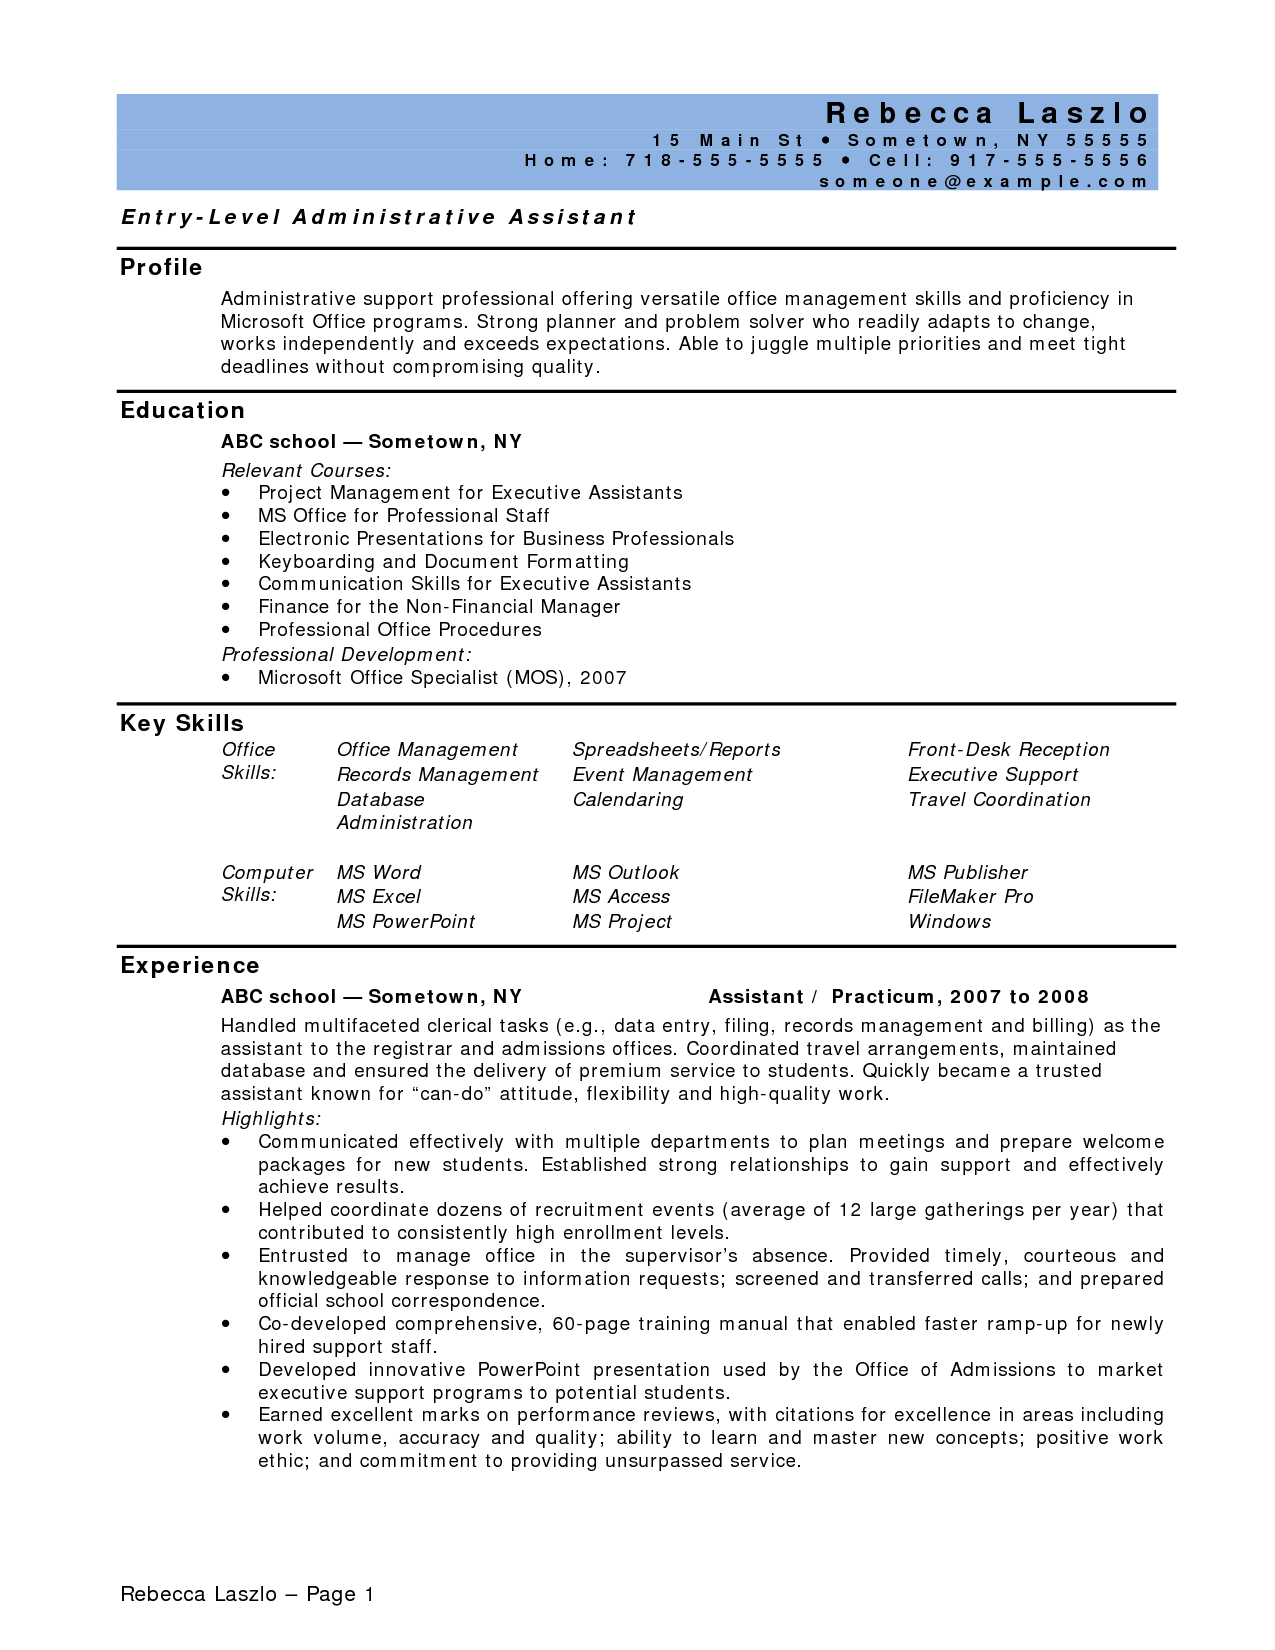 Entry level administrative job resume